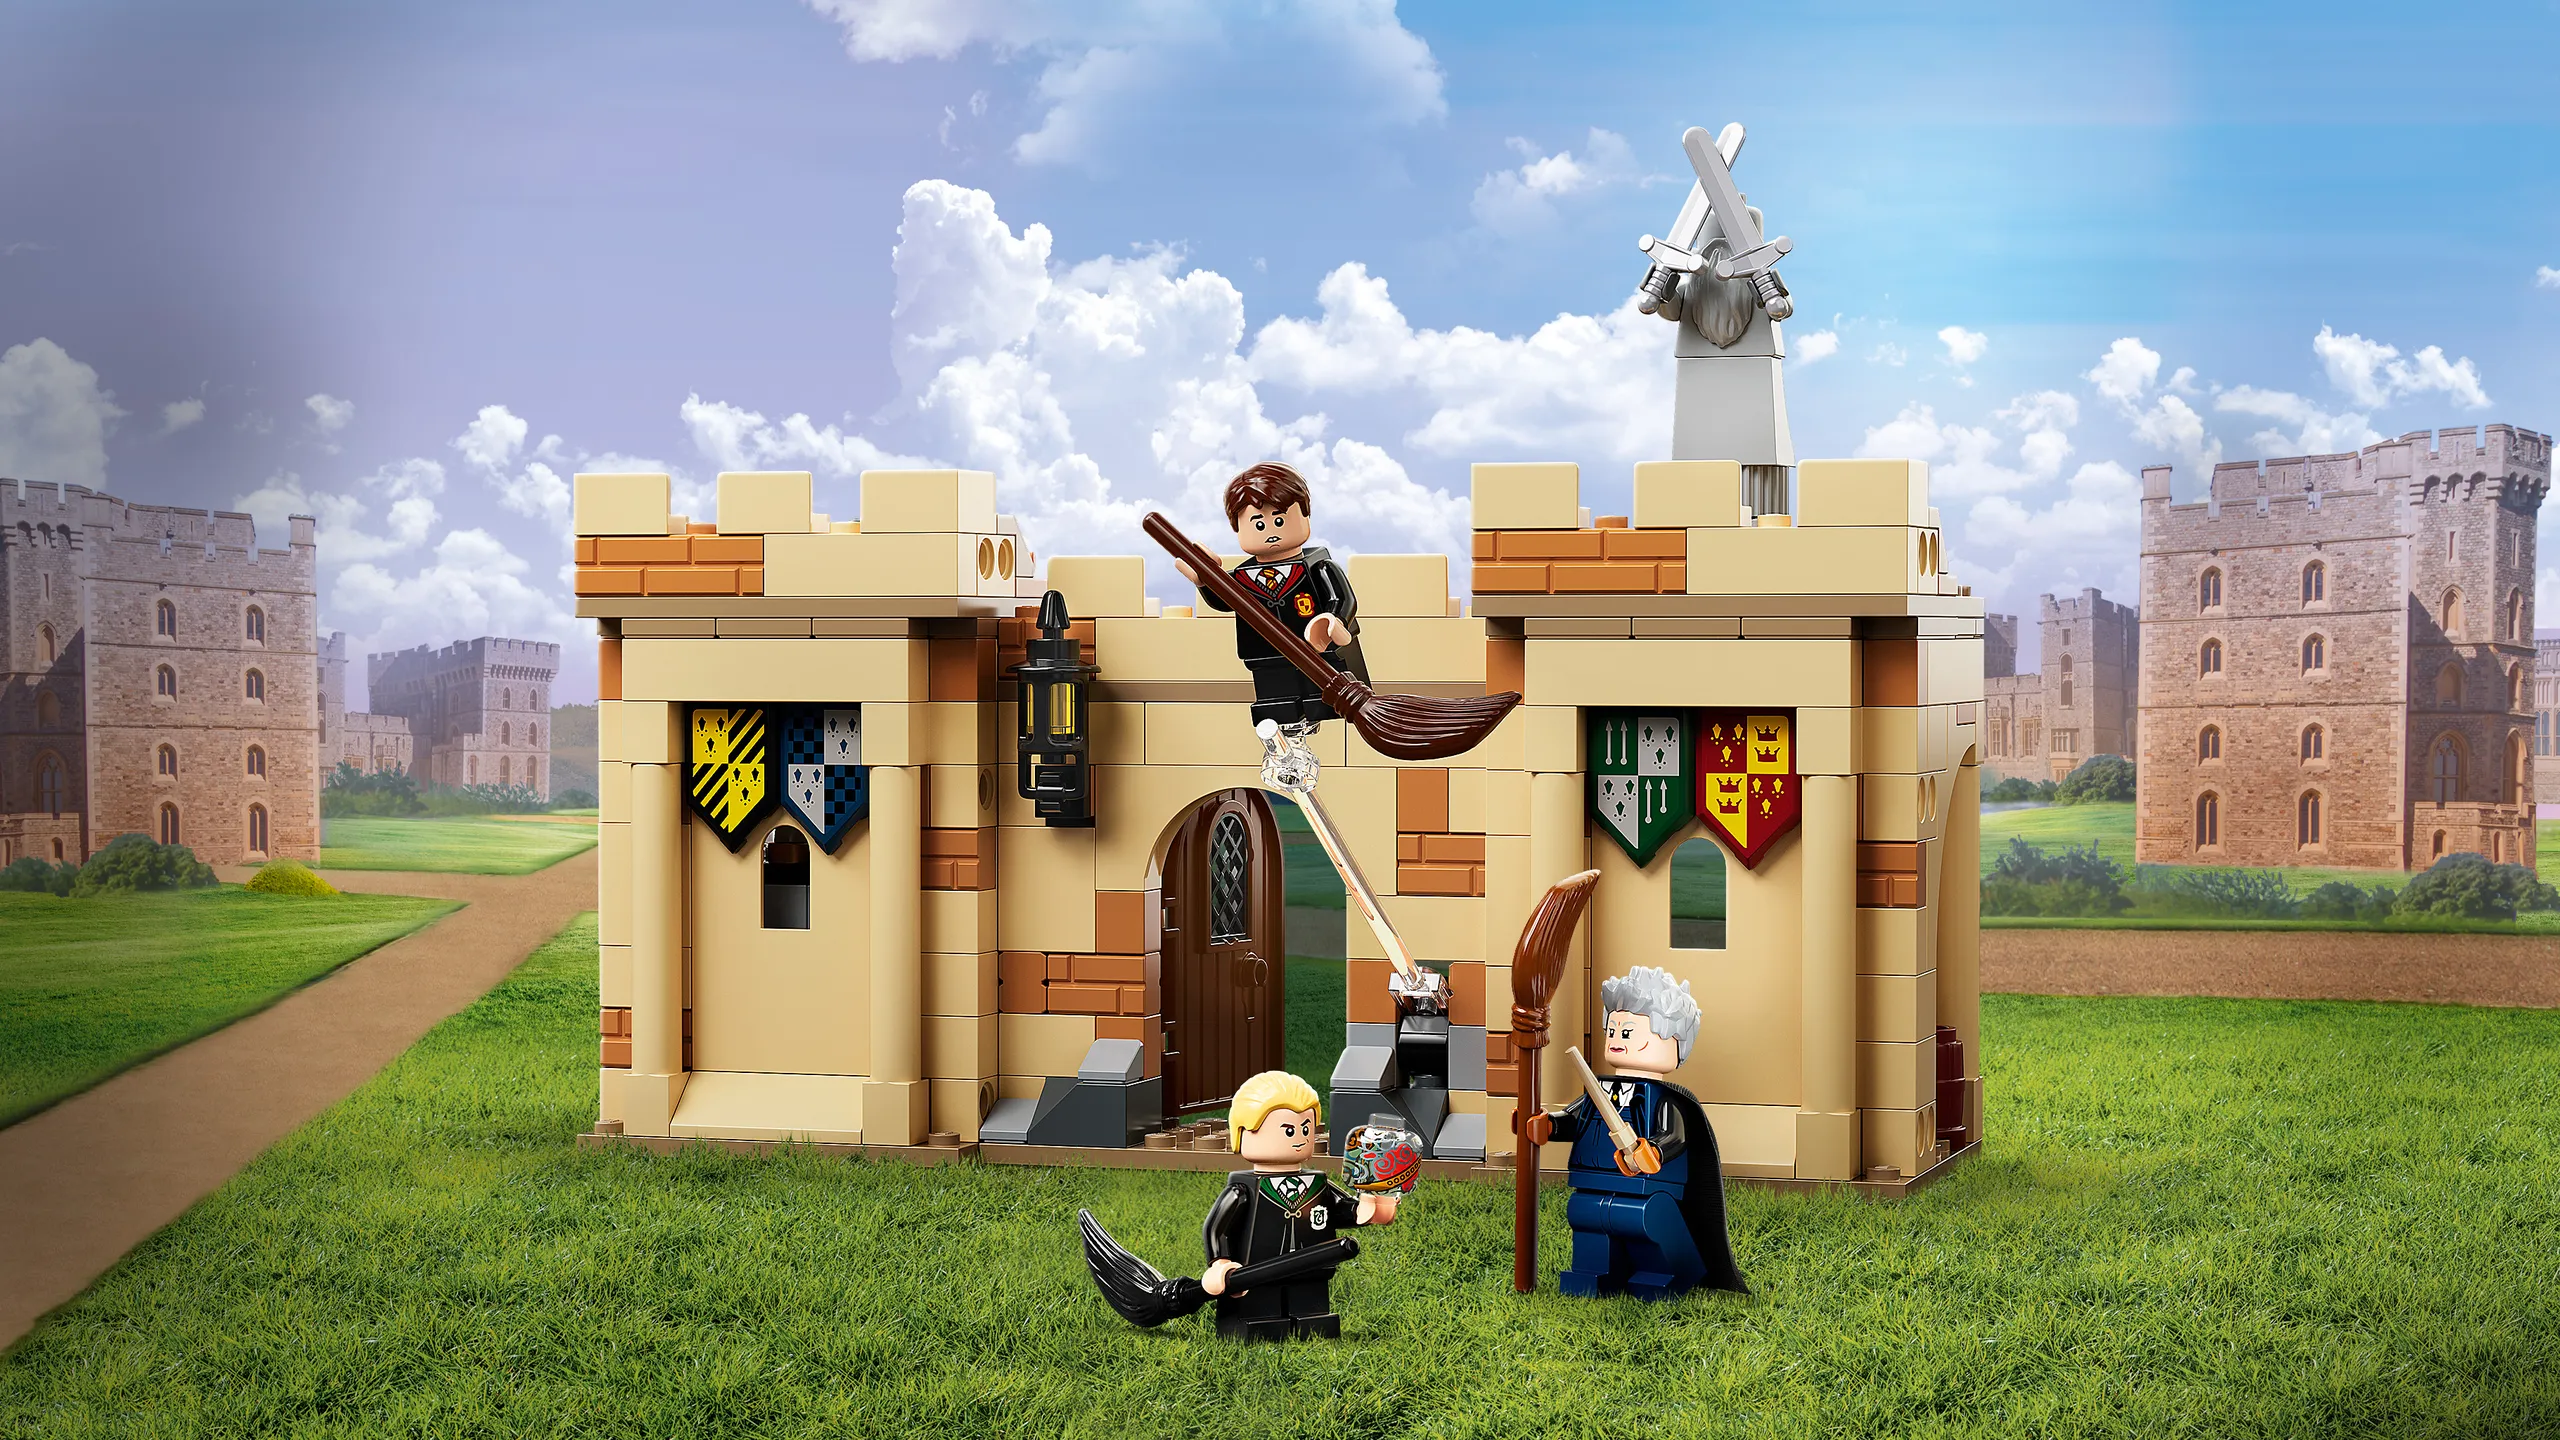 Hogwarts™ Castle Owlery 76430, Harry Potter™